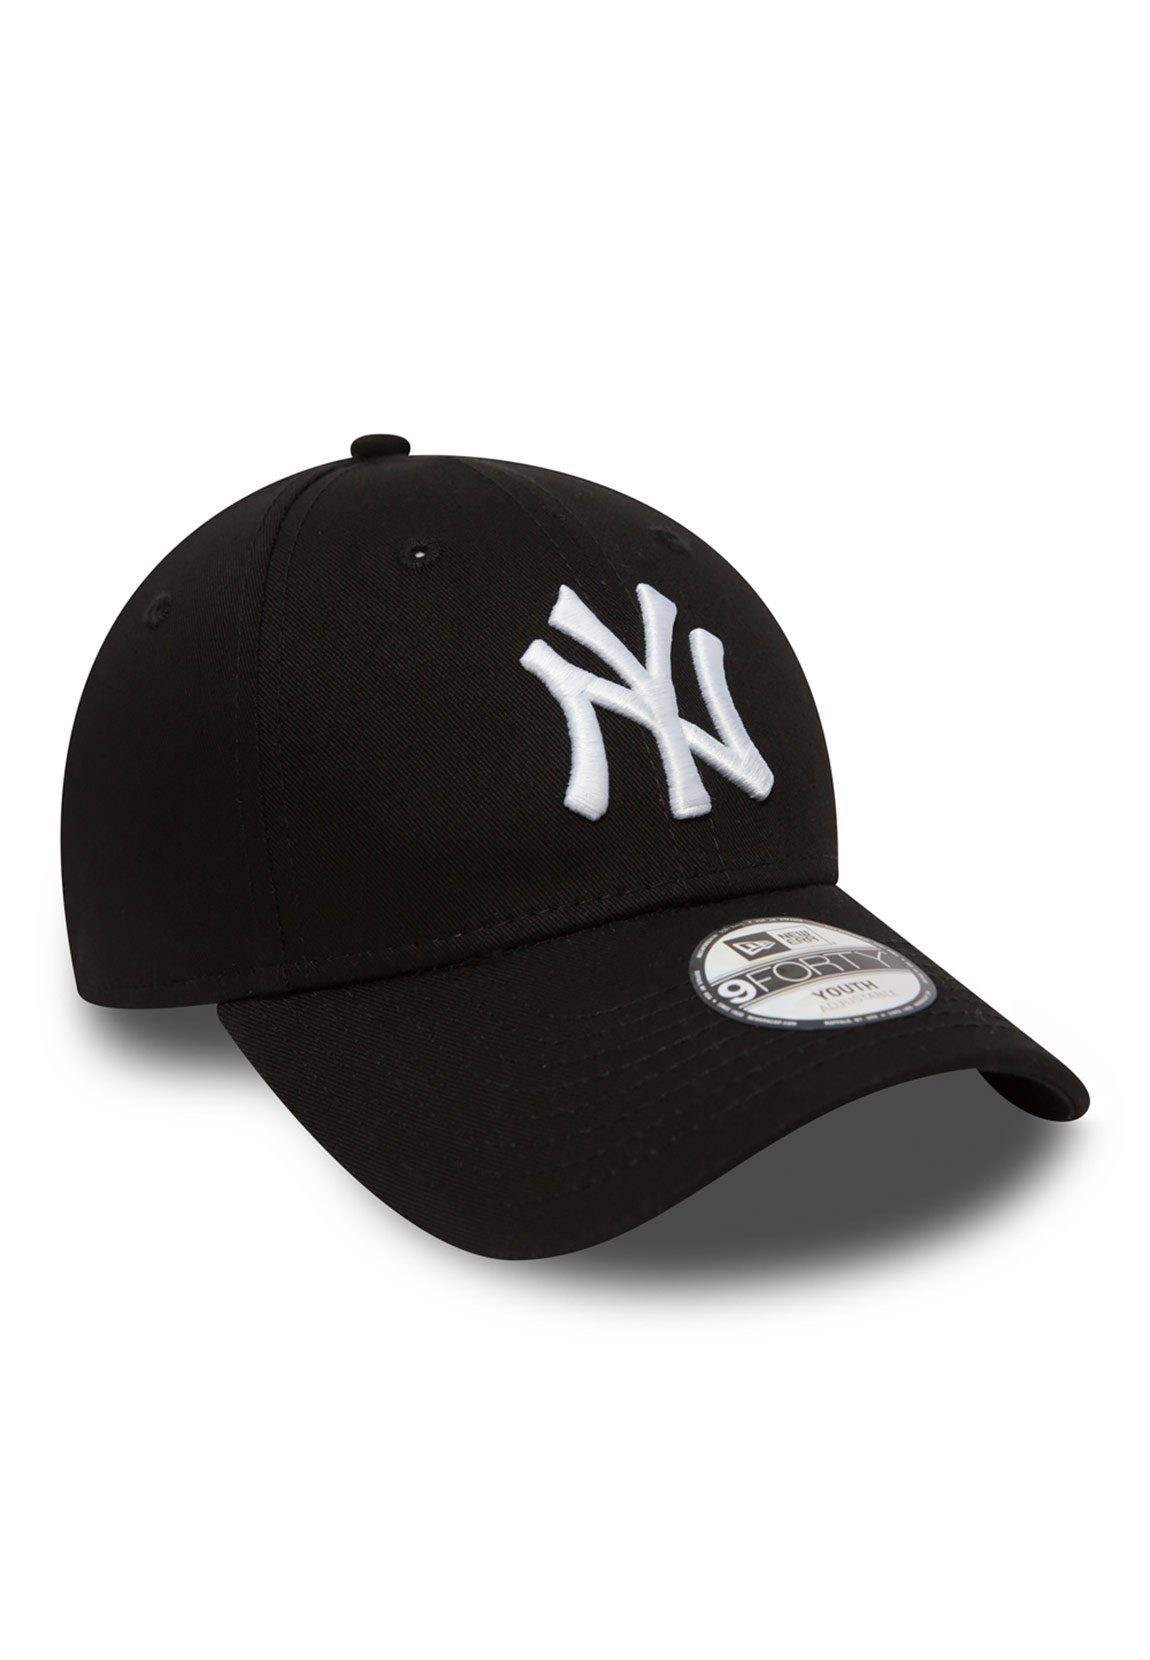 Schwarz/Weiß Era Adjustables - Cap - NY New YANKEES Kids New Era Black-White Cap Baseball